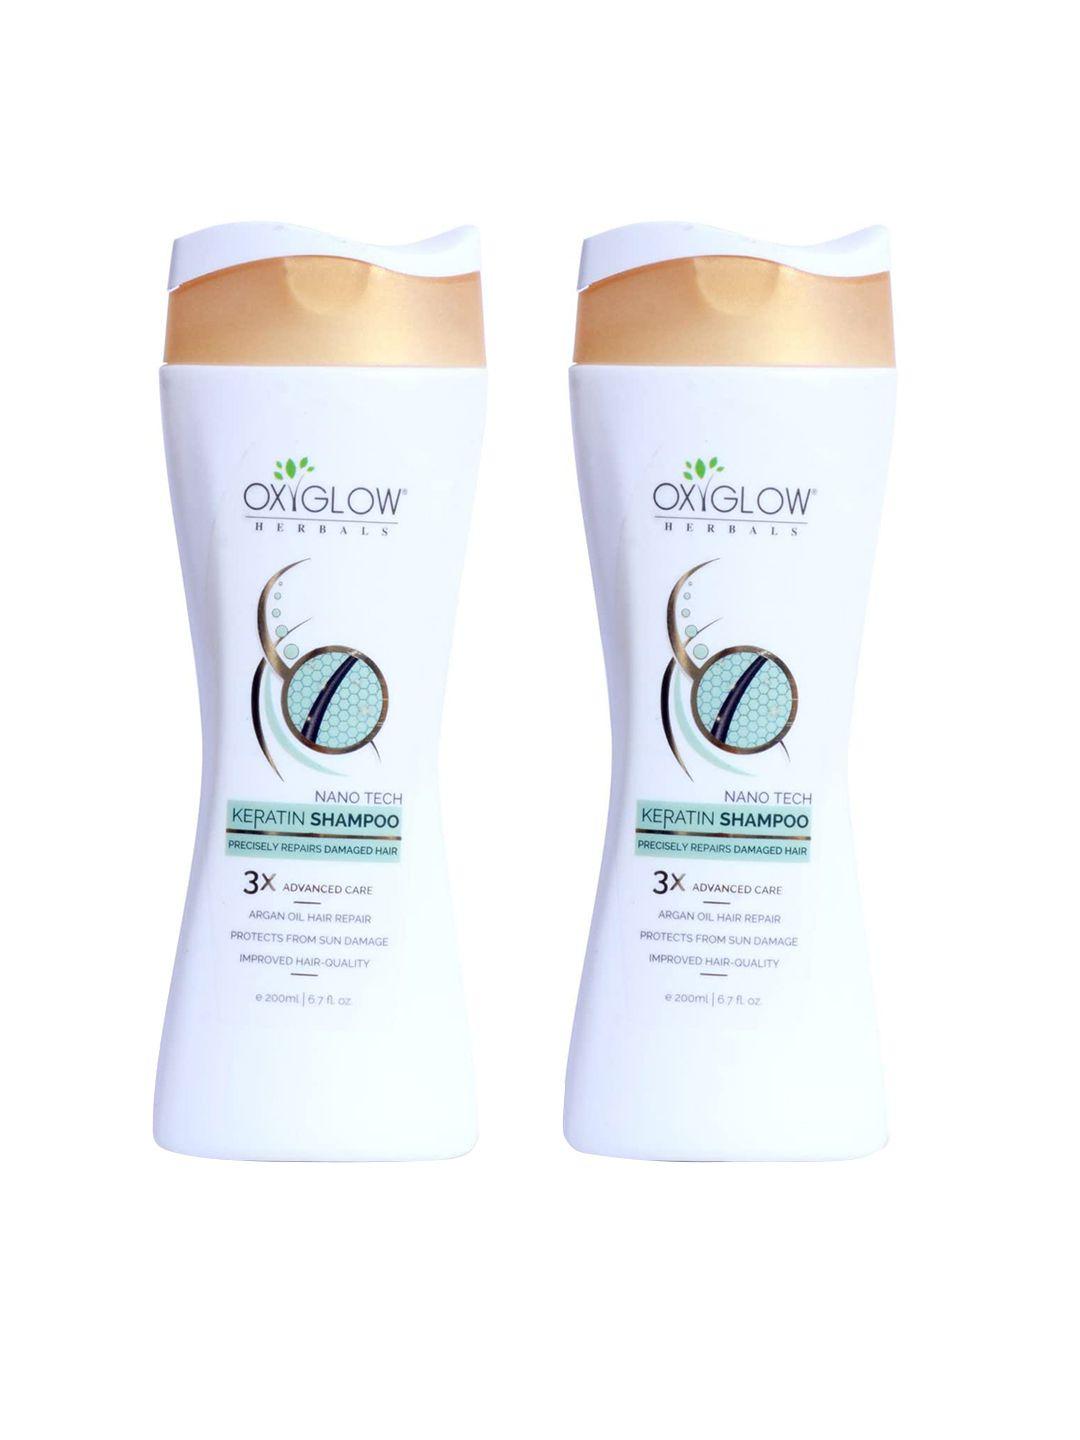 oxyglow set of 2 nano tech  keratin hair shampoo with argan oil - 200ml each